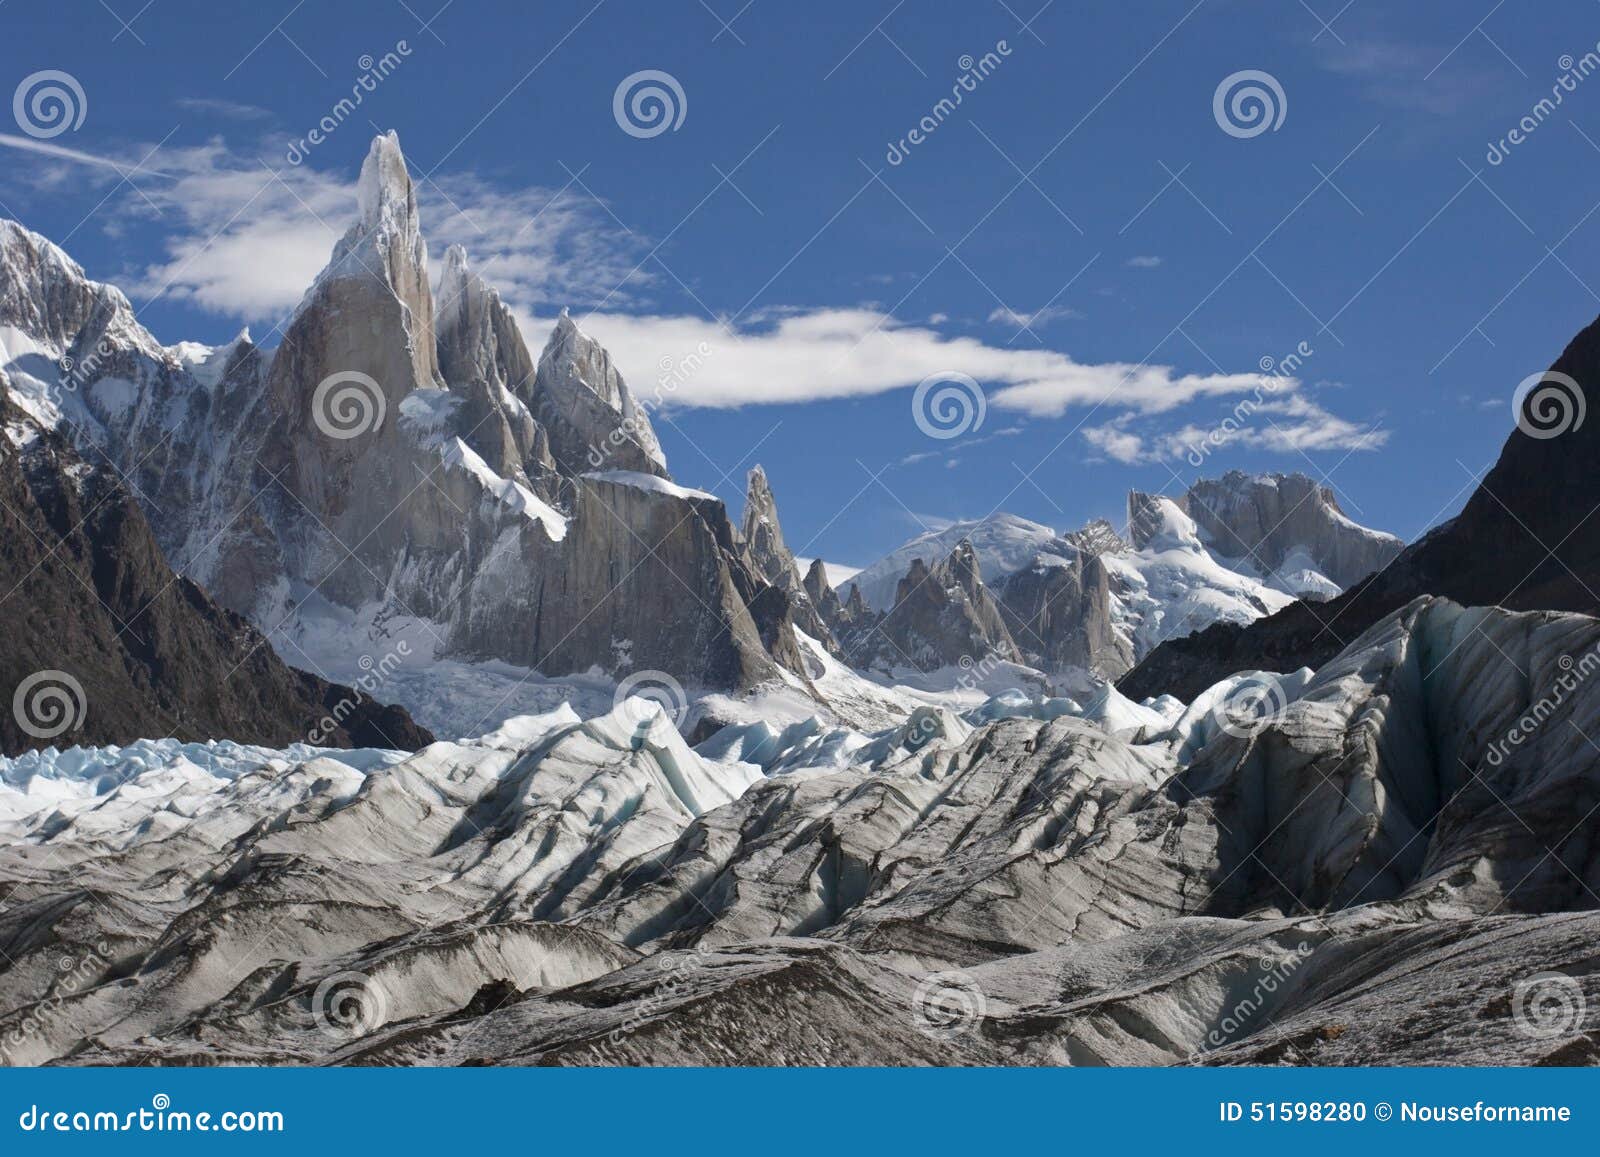 to cerro torre glacier, patagonia, argentina